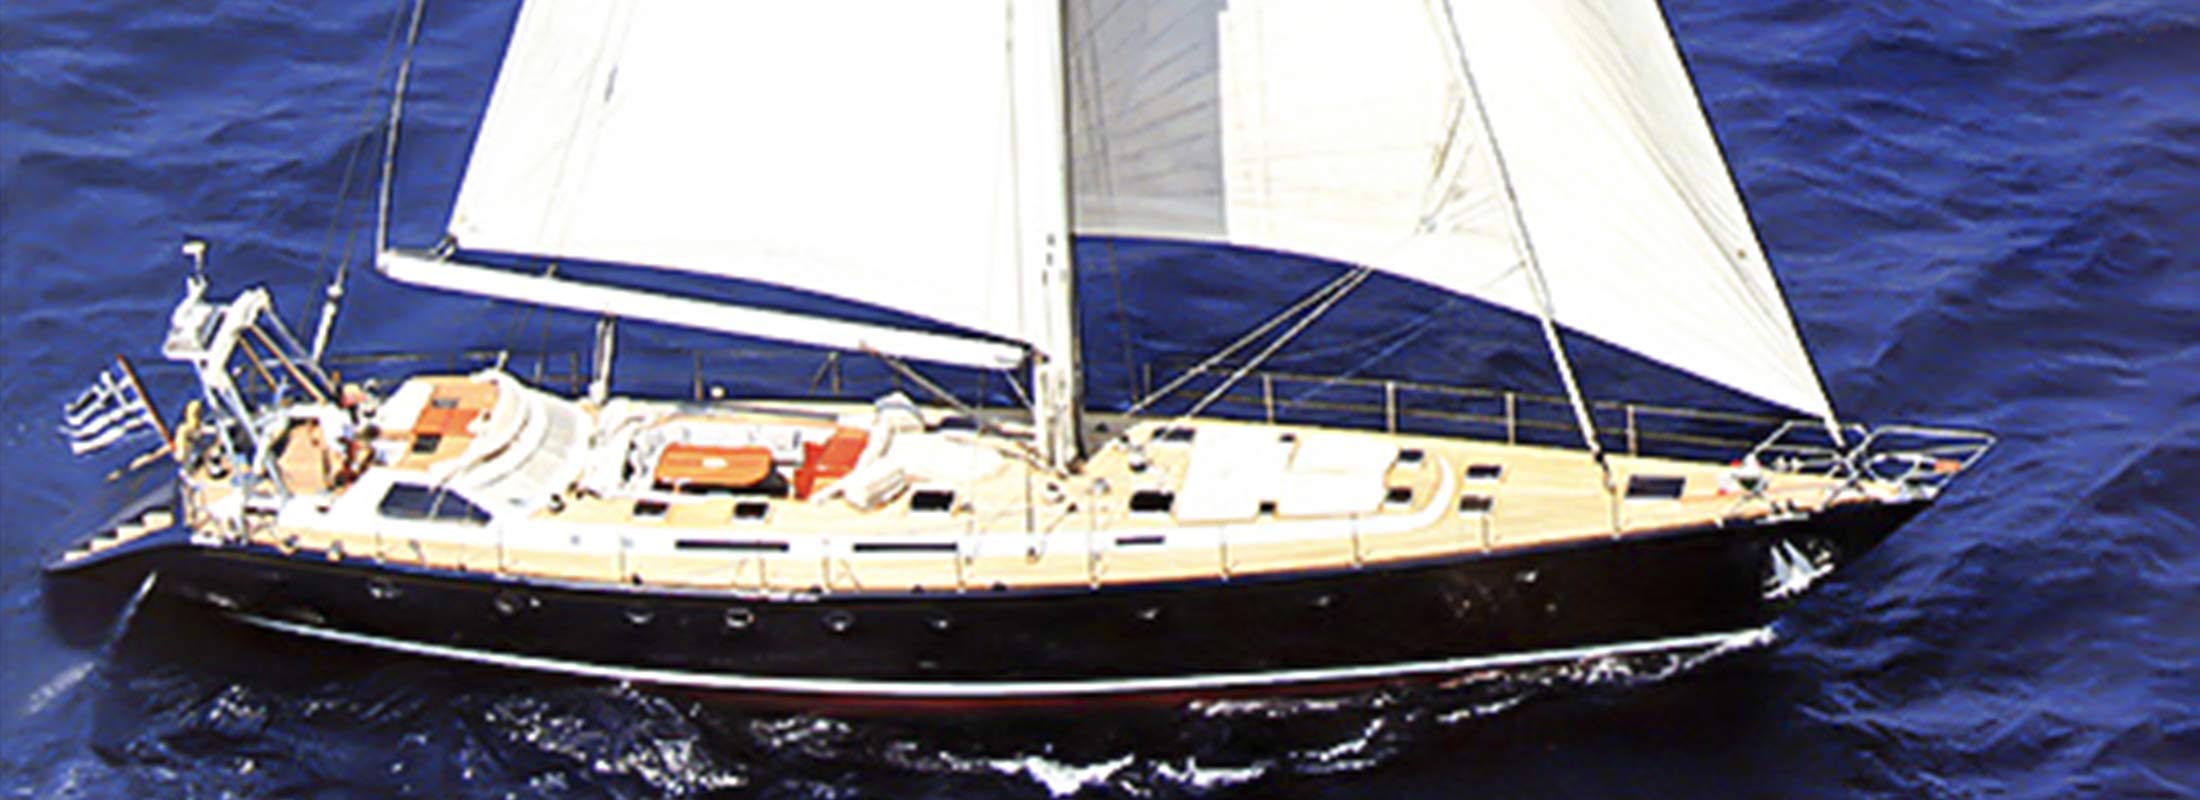 Wind of Change Sailing Yacht for Charter Mediterranean slider 1